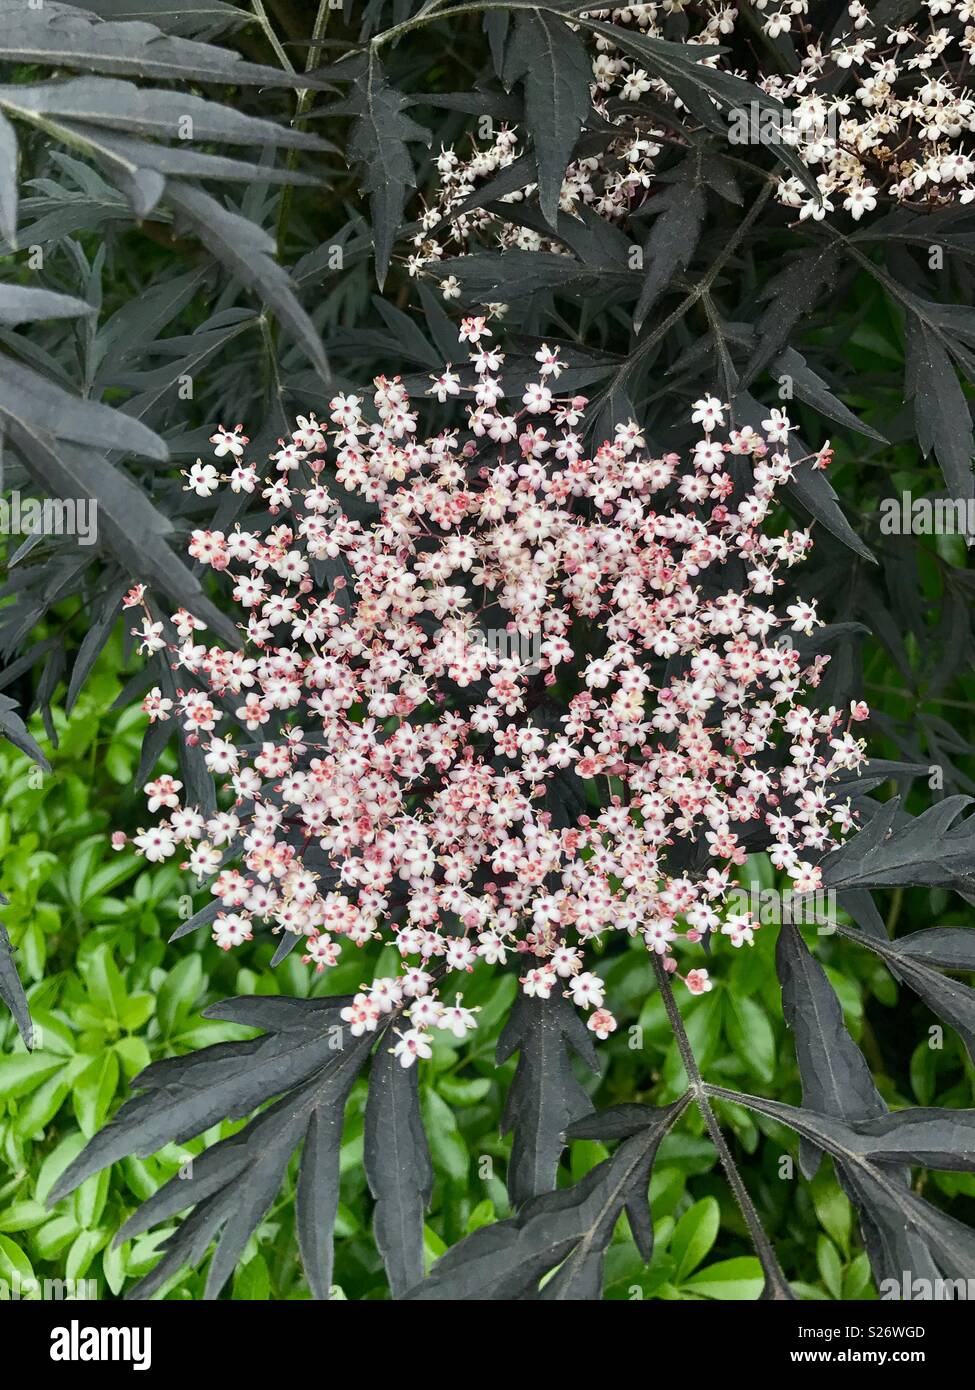 Summer flowering plant Stock Photo